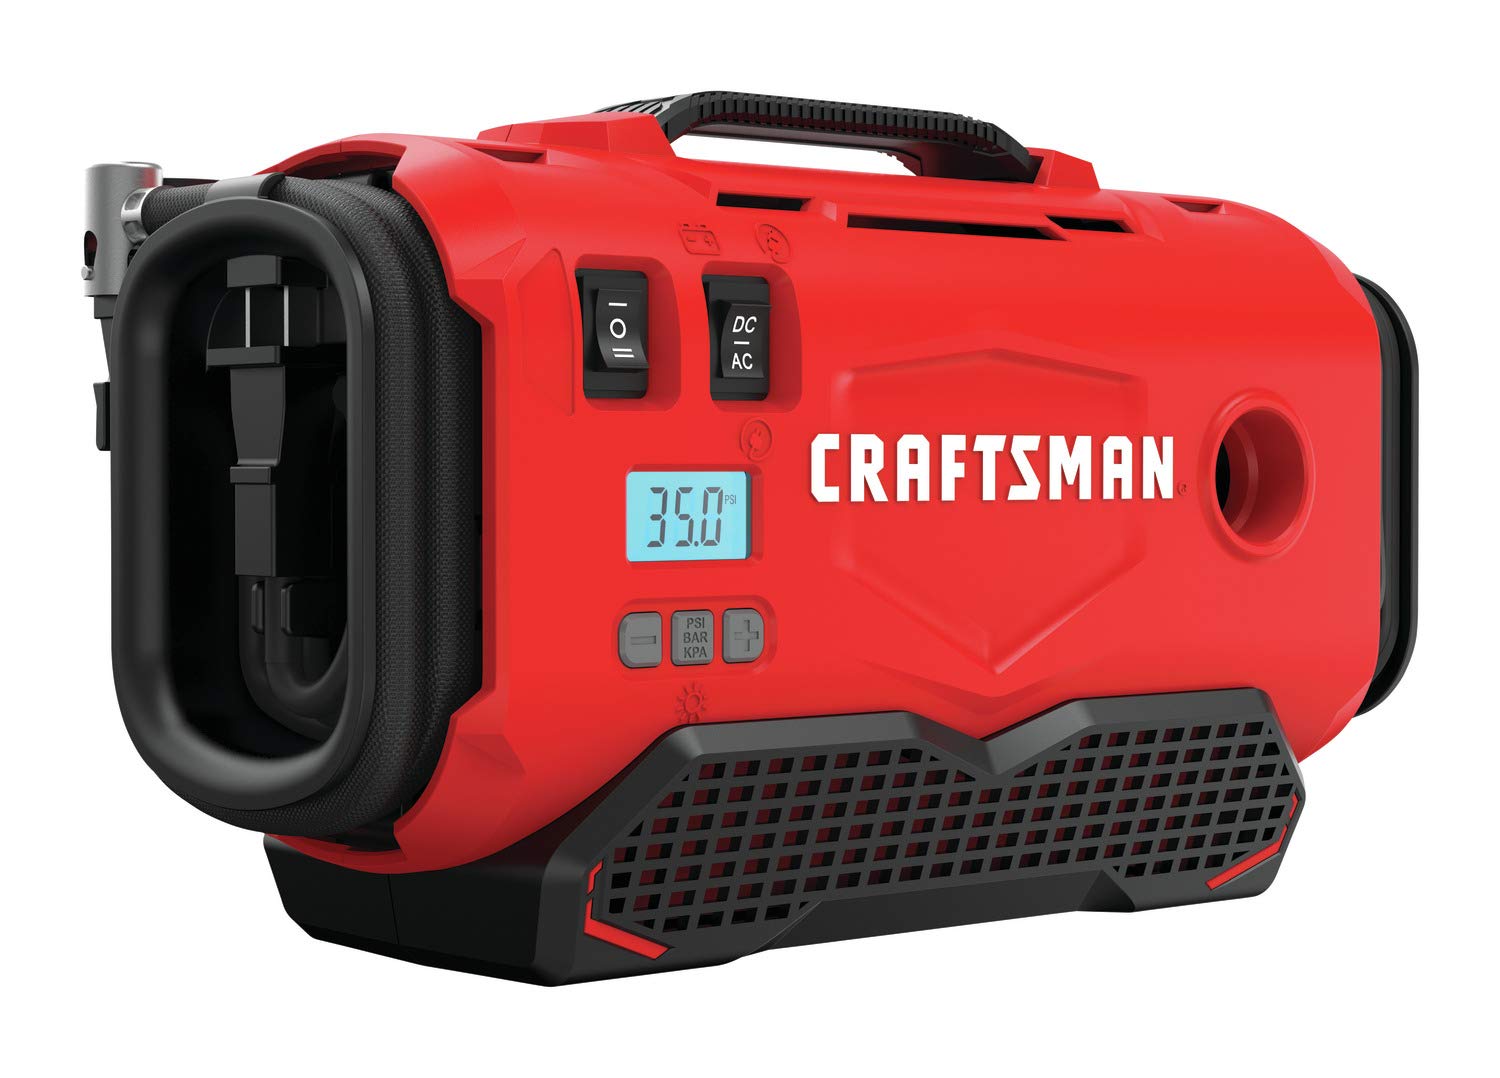 Craftsman V20 轮胎充气机，紧凑便携，自动关闭，数字 PSI 压力表，仅裸工具 (CMCE520B...